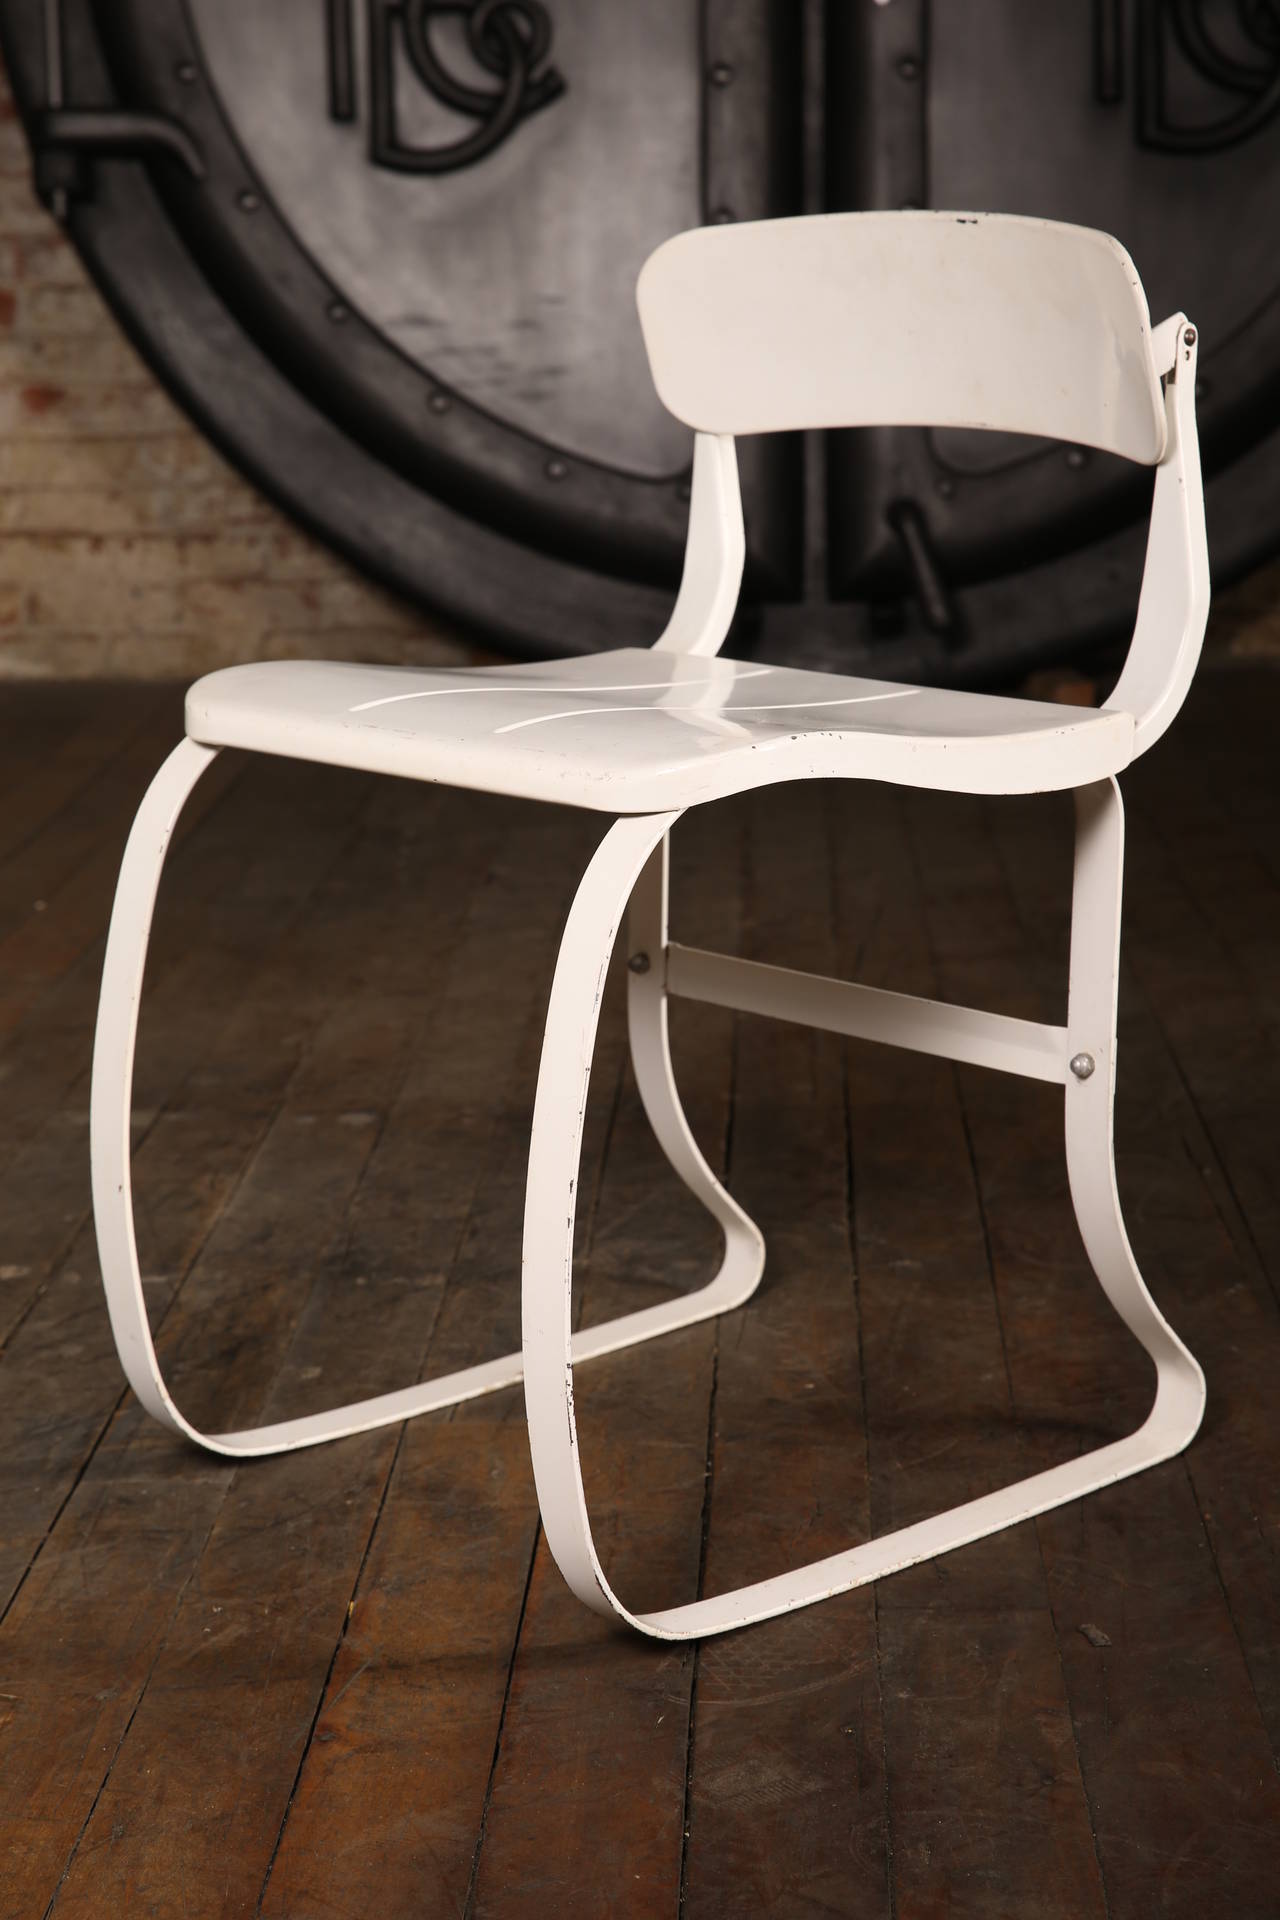 Vintage Industrial ironrite health chair. A very nice Herman Sperlich chair. Seat height is 18".